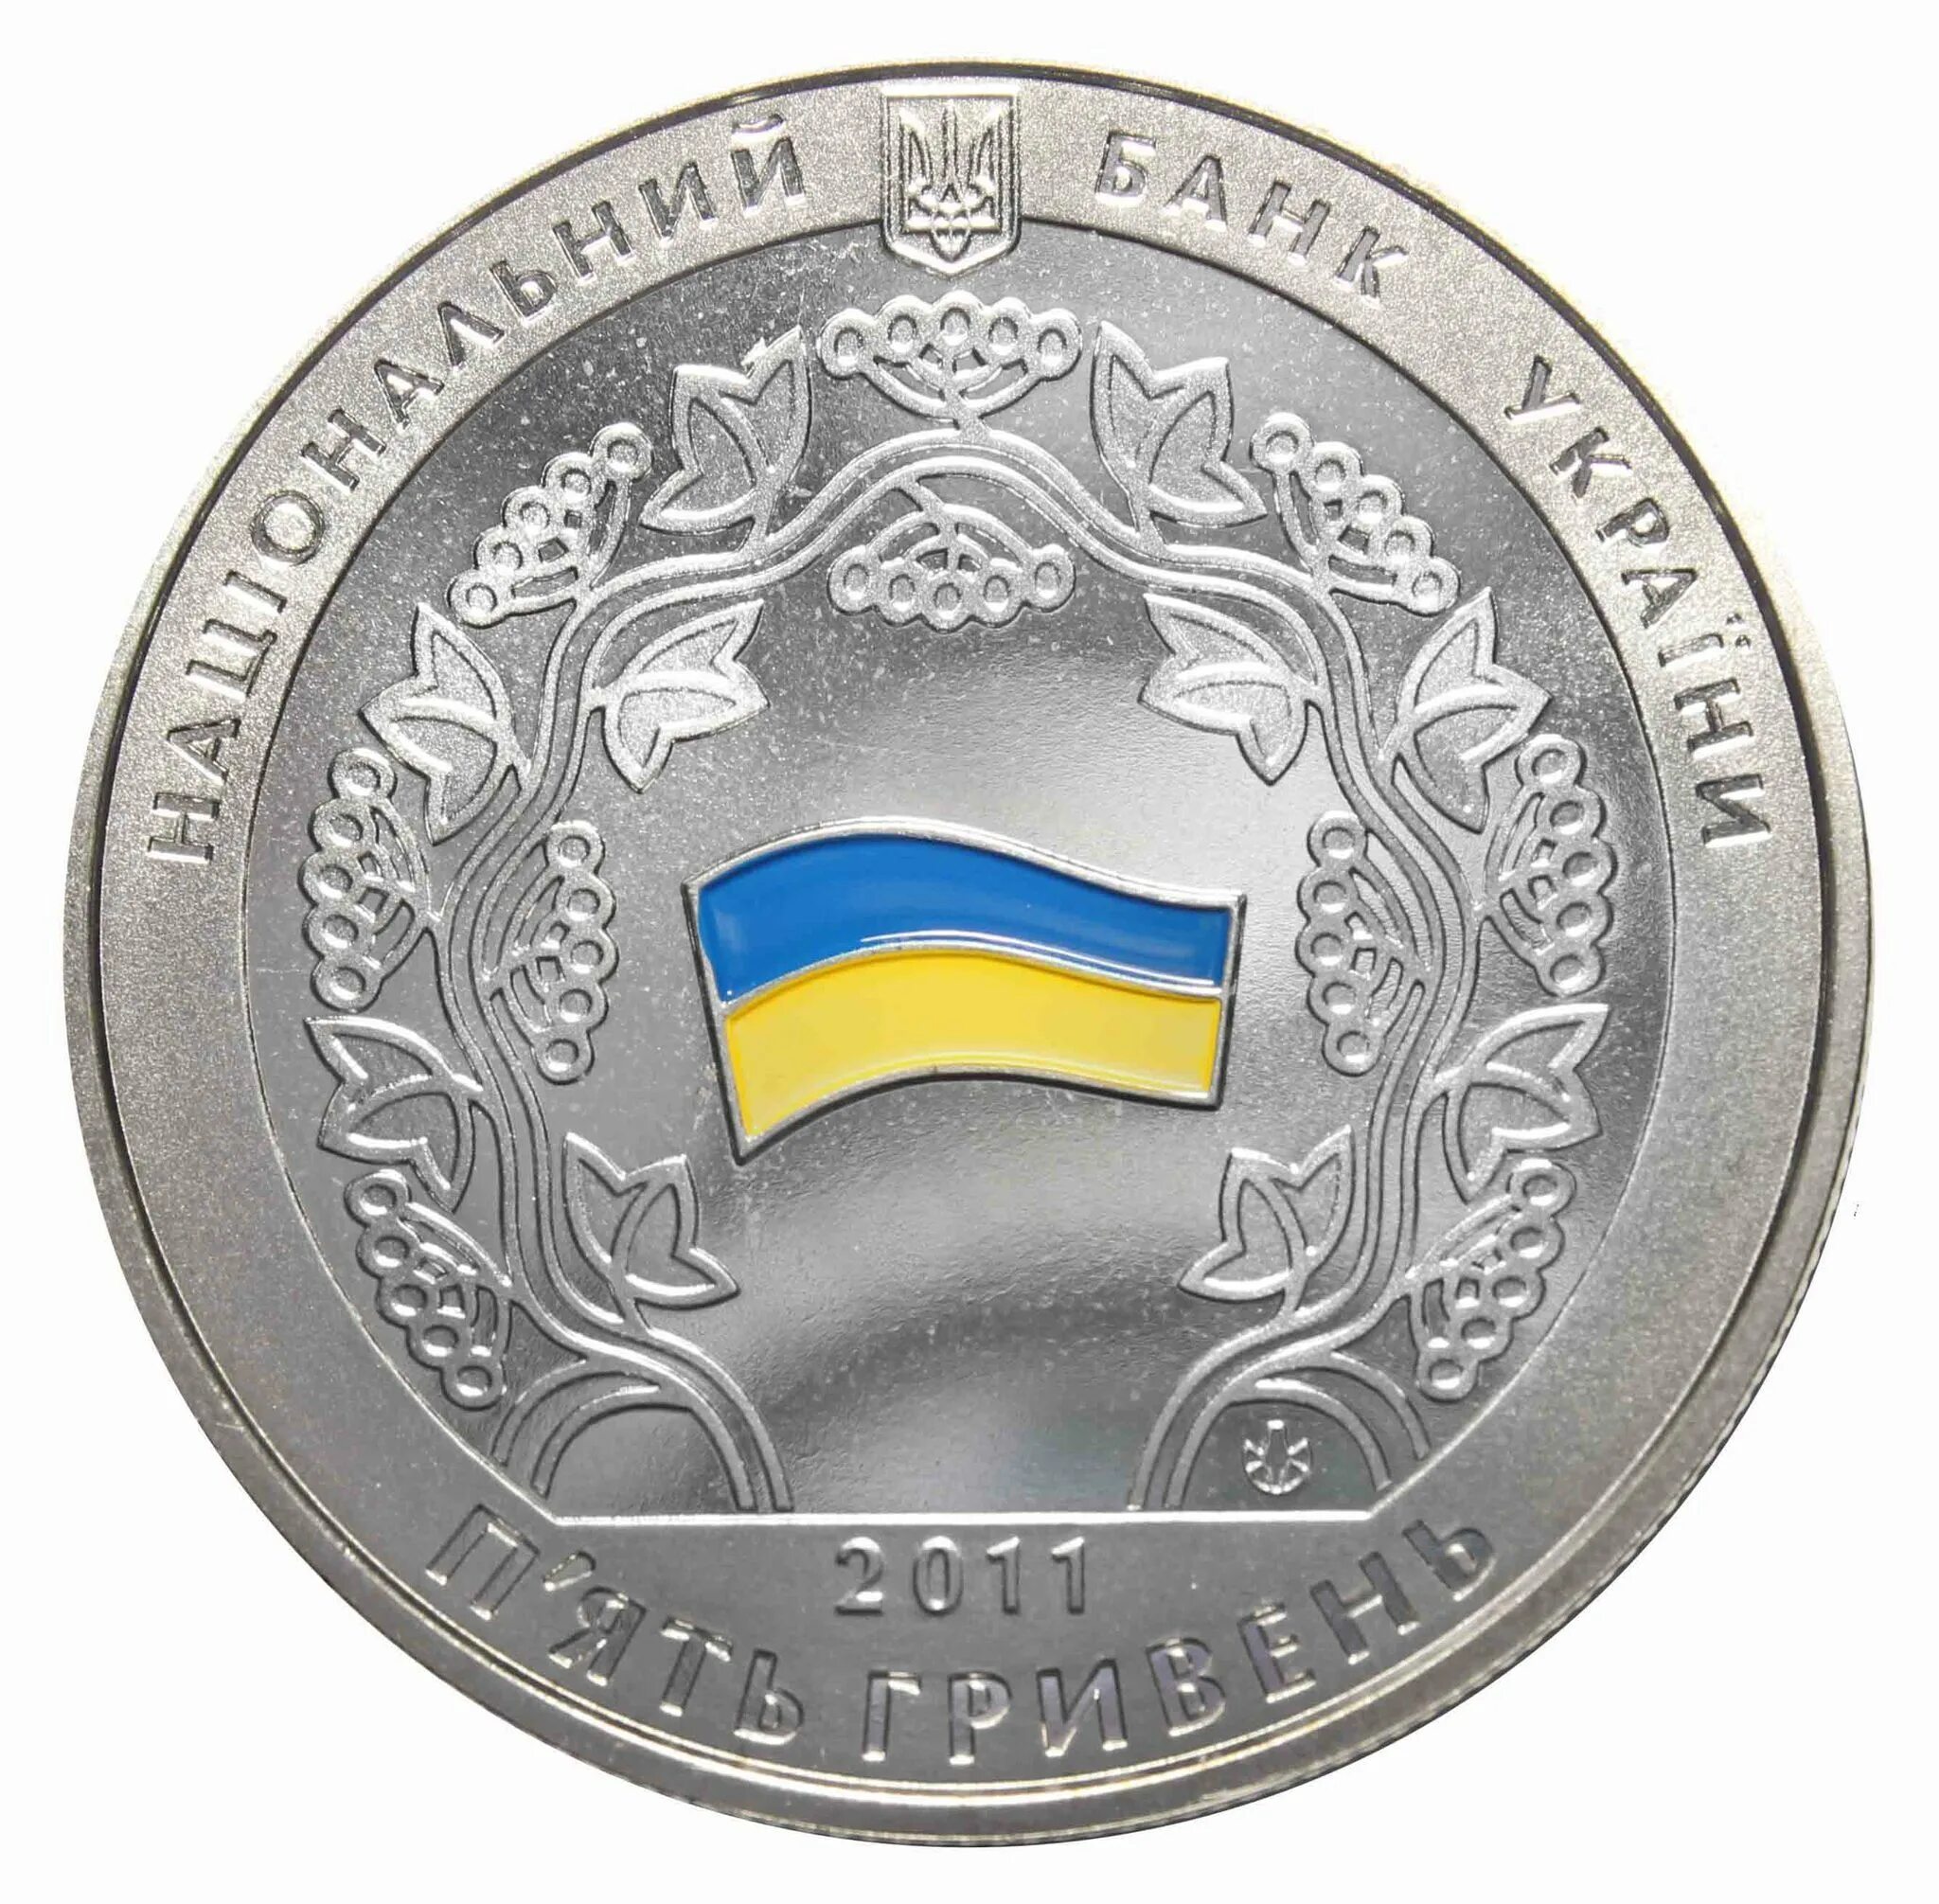 5 Гривен Украины 2022 года. Украина 2011 год. 15 Гривен. 5 Гривен фото.